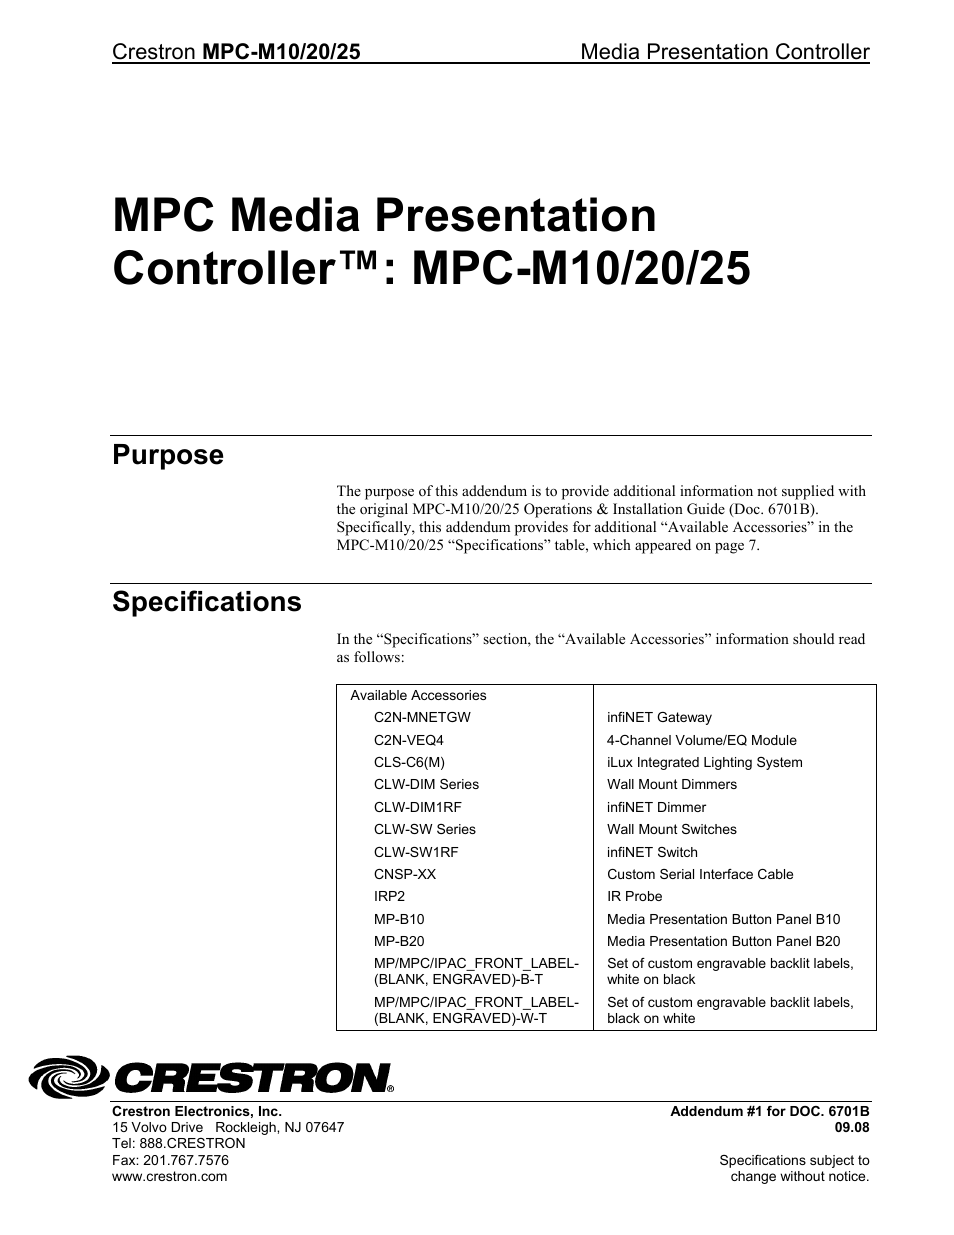 MPC Media Presentation Controller MPC-M10/20/25